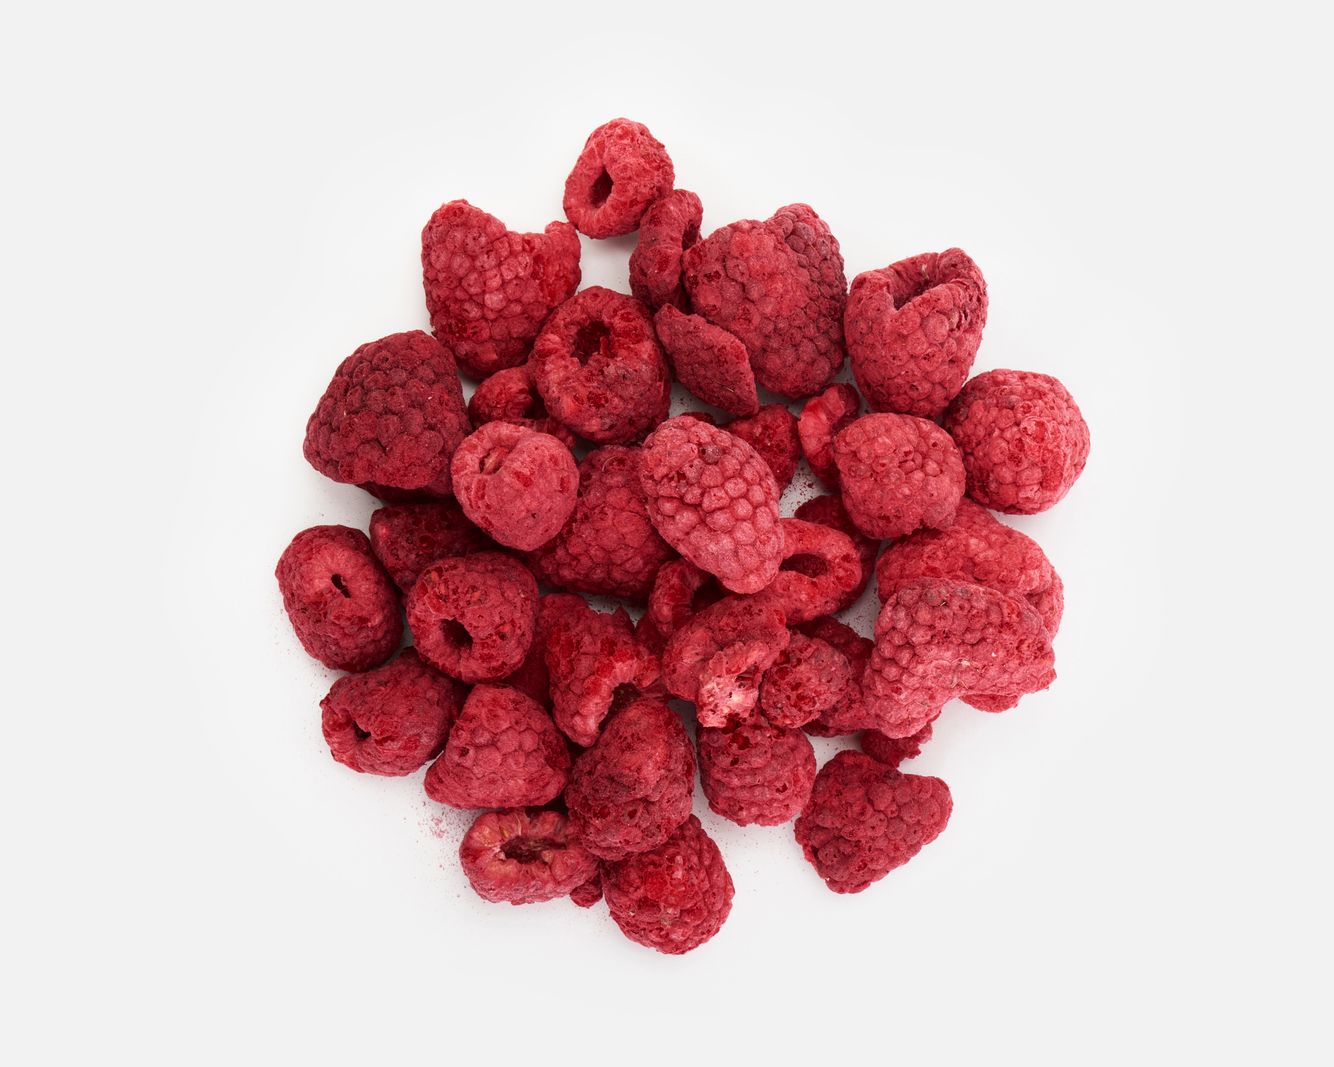 Vilgain Freeze Dried Raspberries